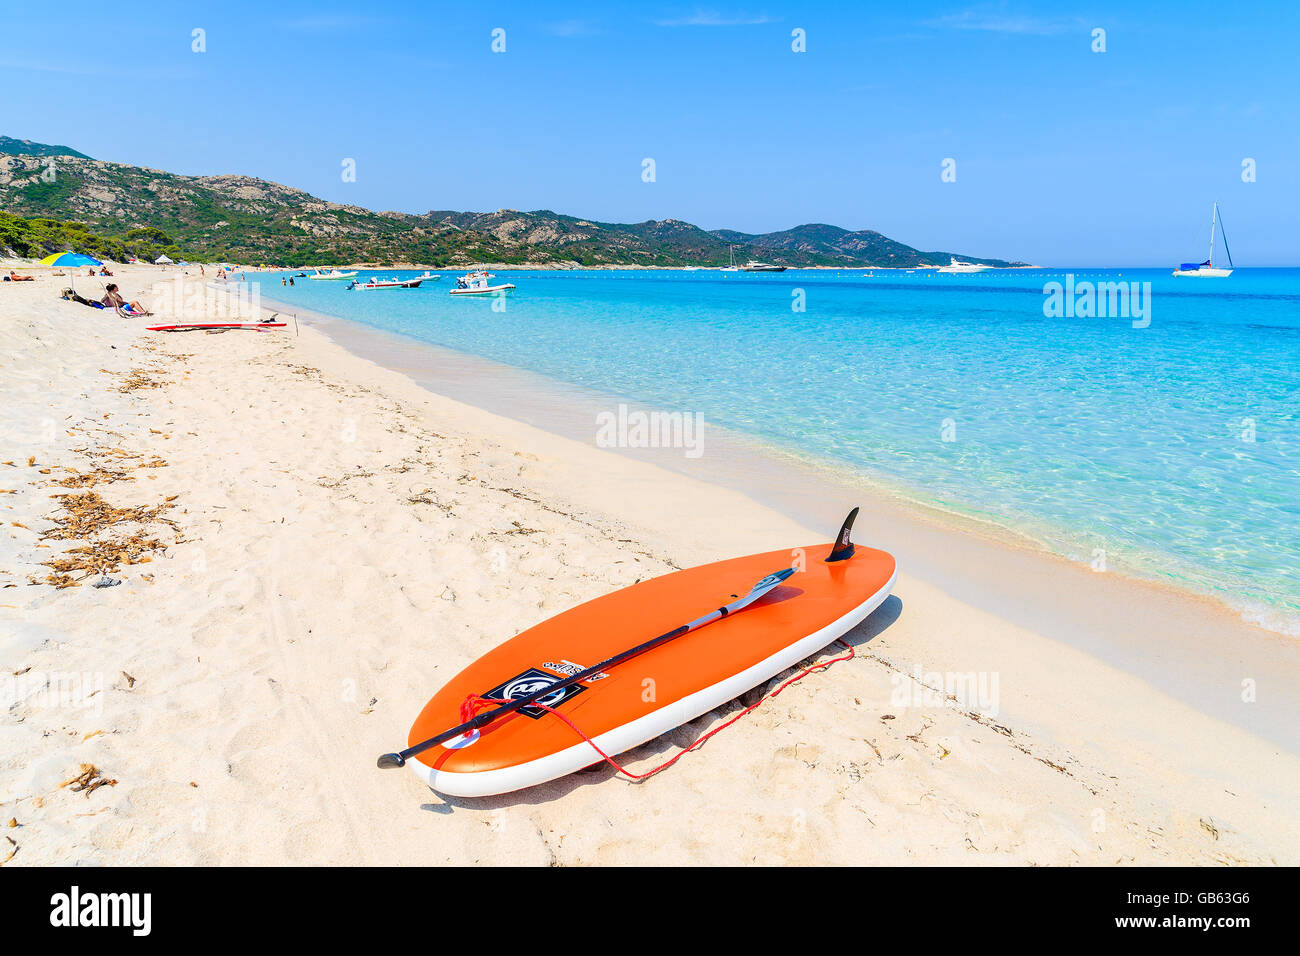 SALECCIA BEACH, CORSICA ISLAND - JUL 3, 2015: surfing board on sandy shore of idyllic Saleccia beach, Corsica island, France. Stock Photo